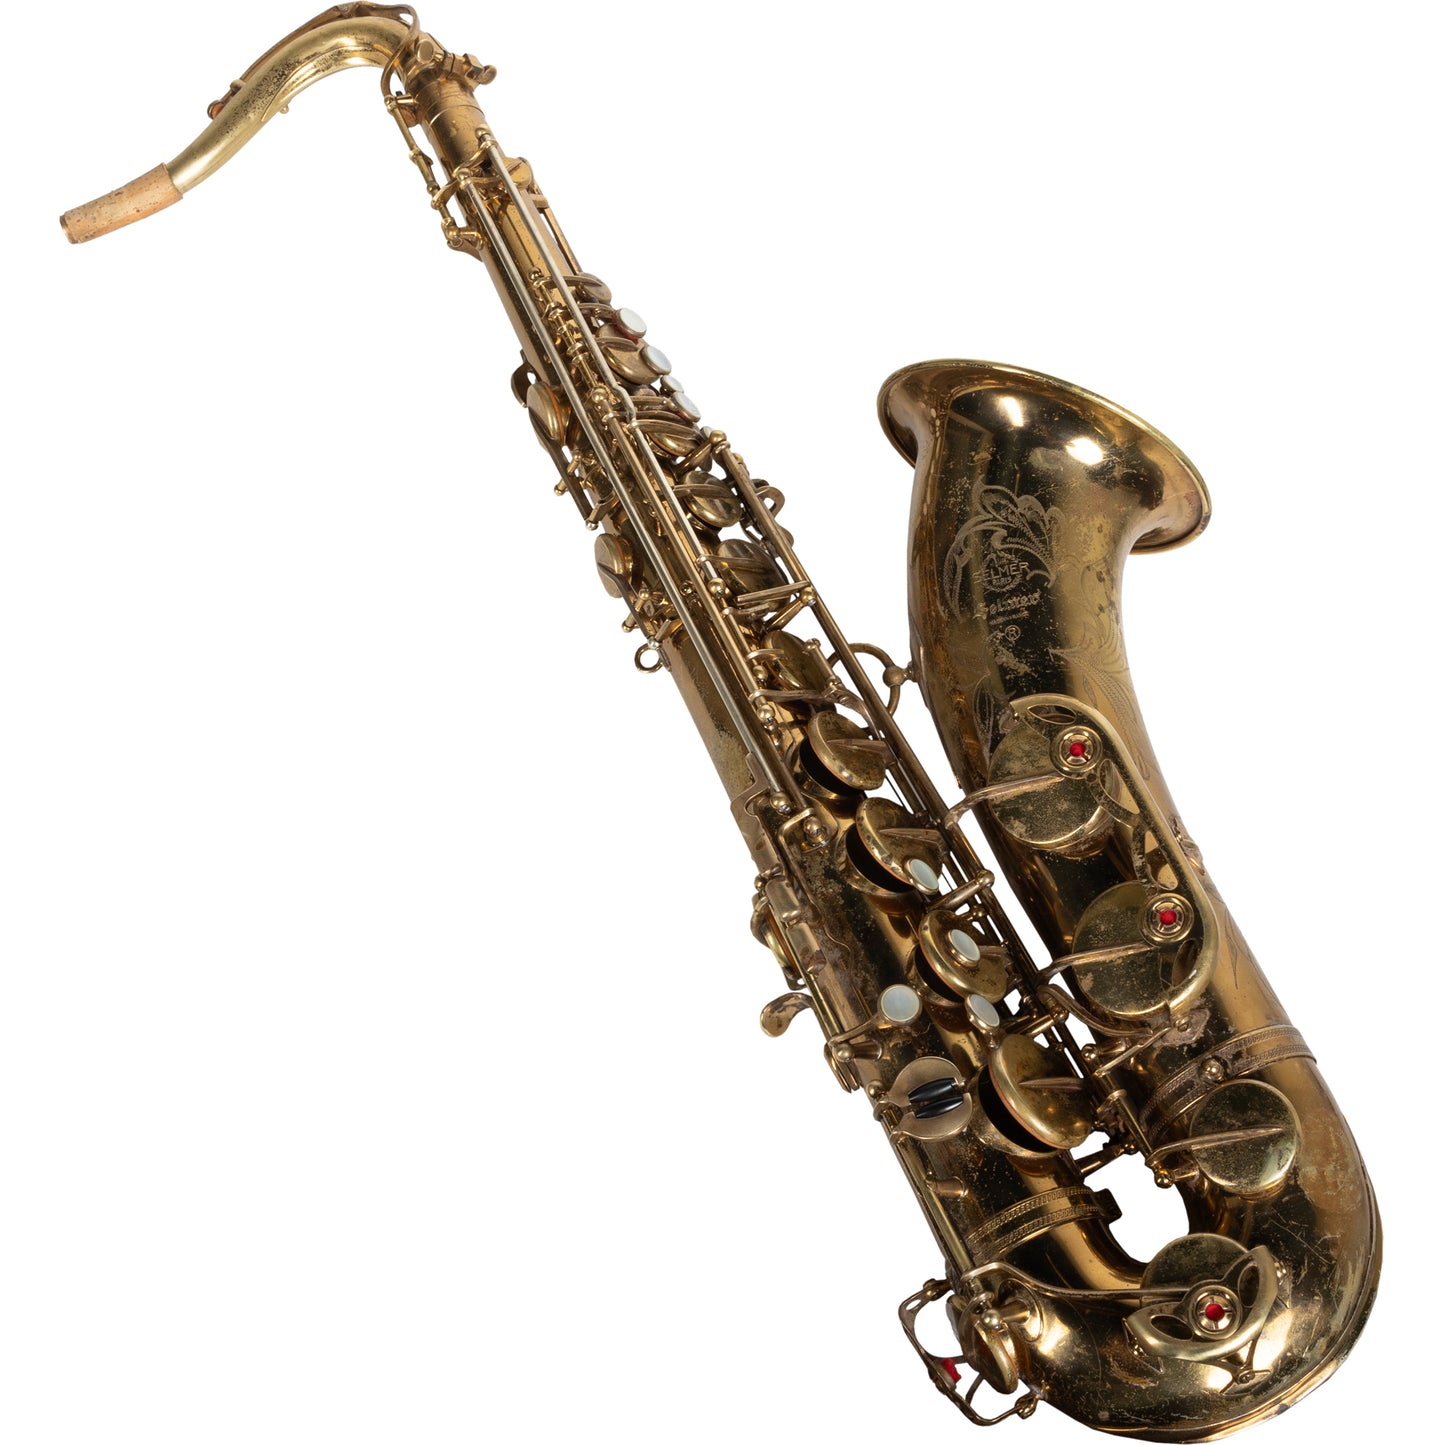 Selmer Paris Mark VI Made In France 1966 Tenor Saxophone w/ Original Lacquer